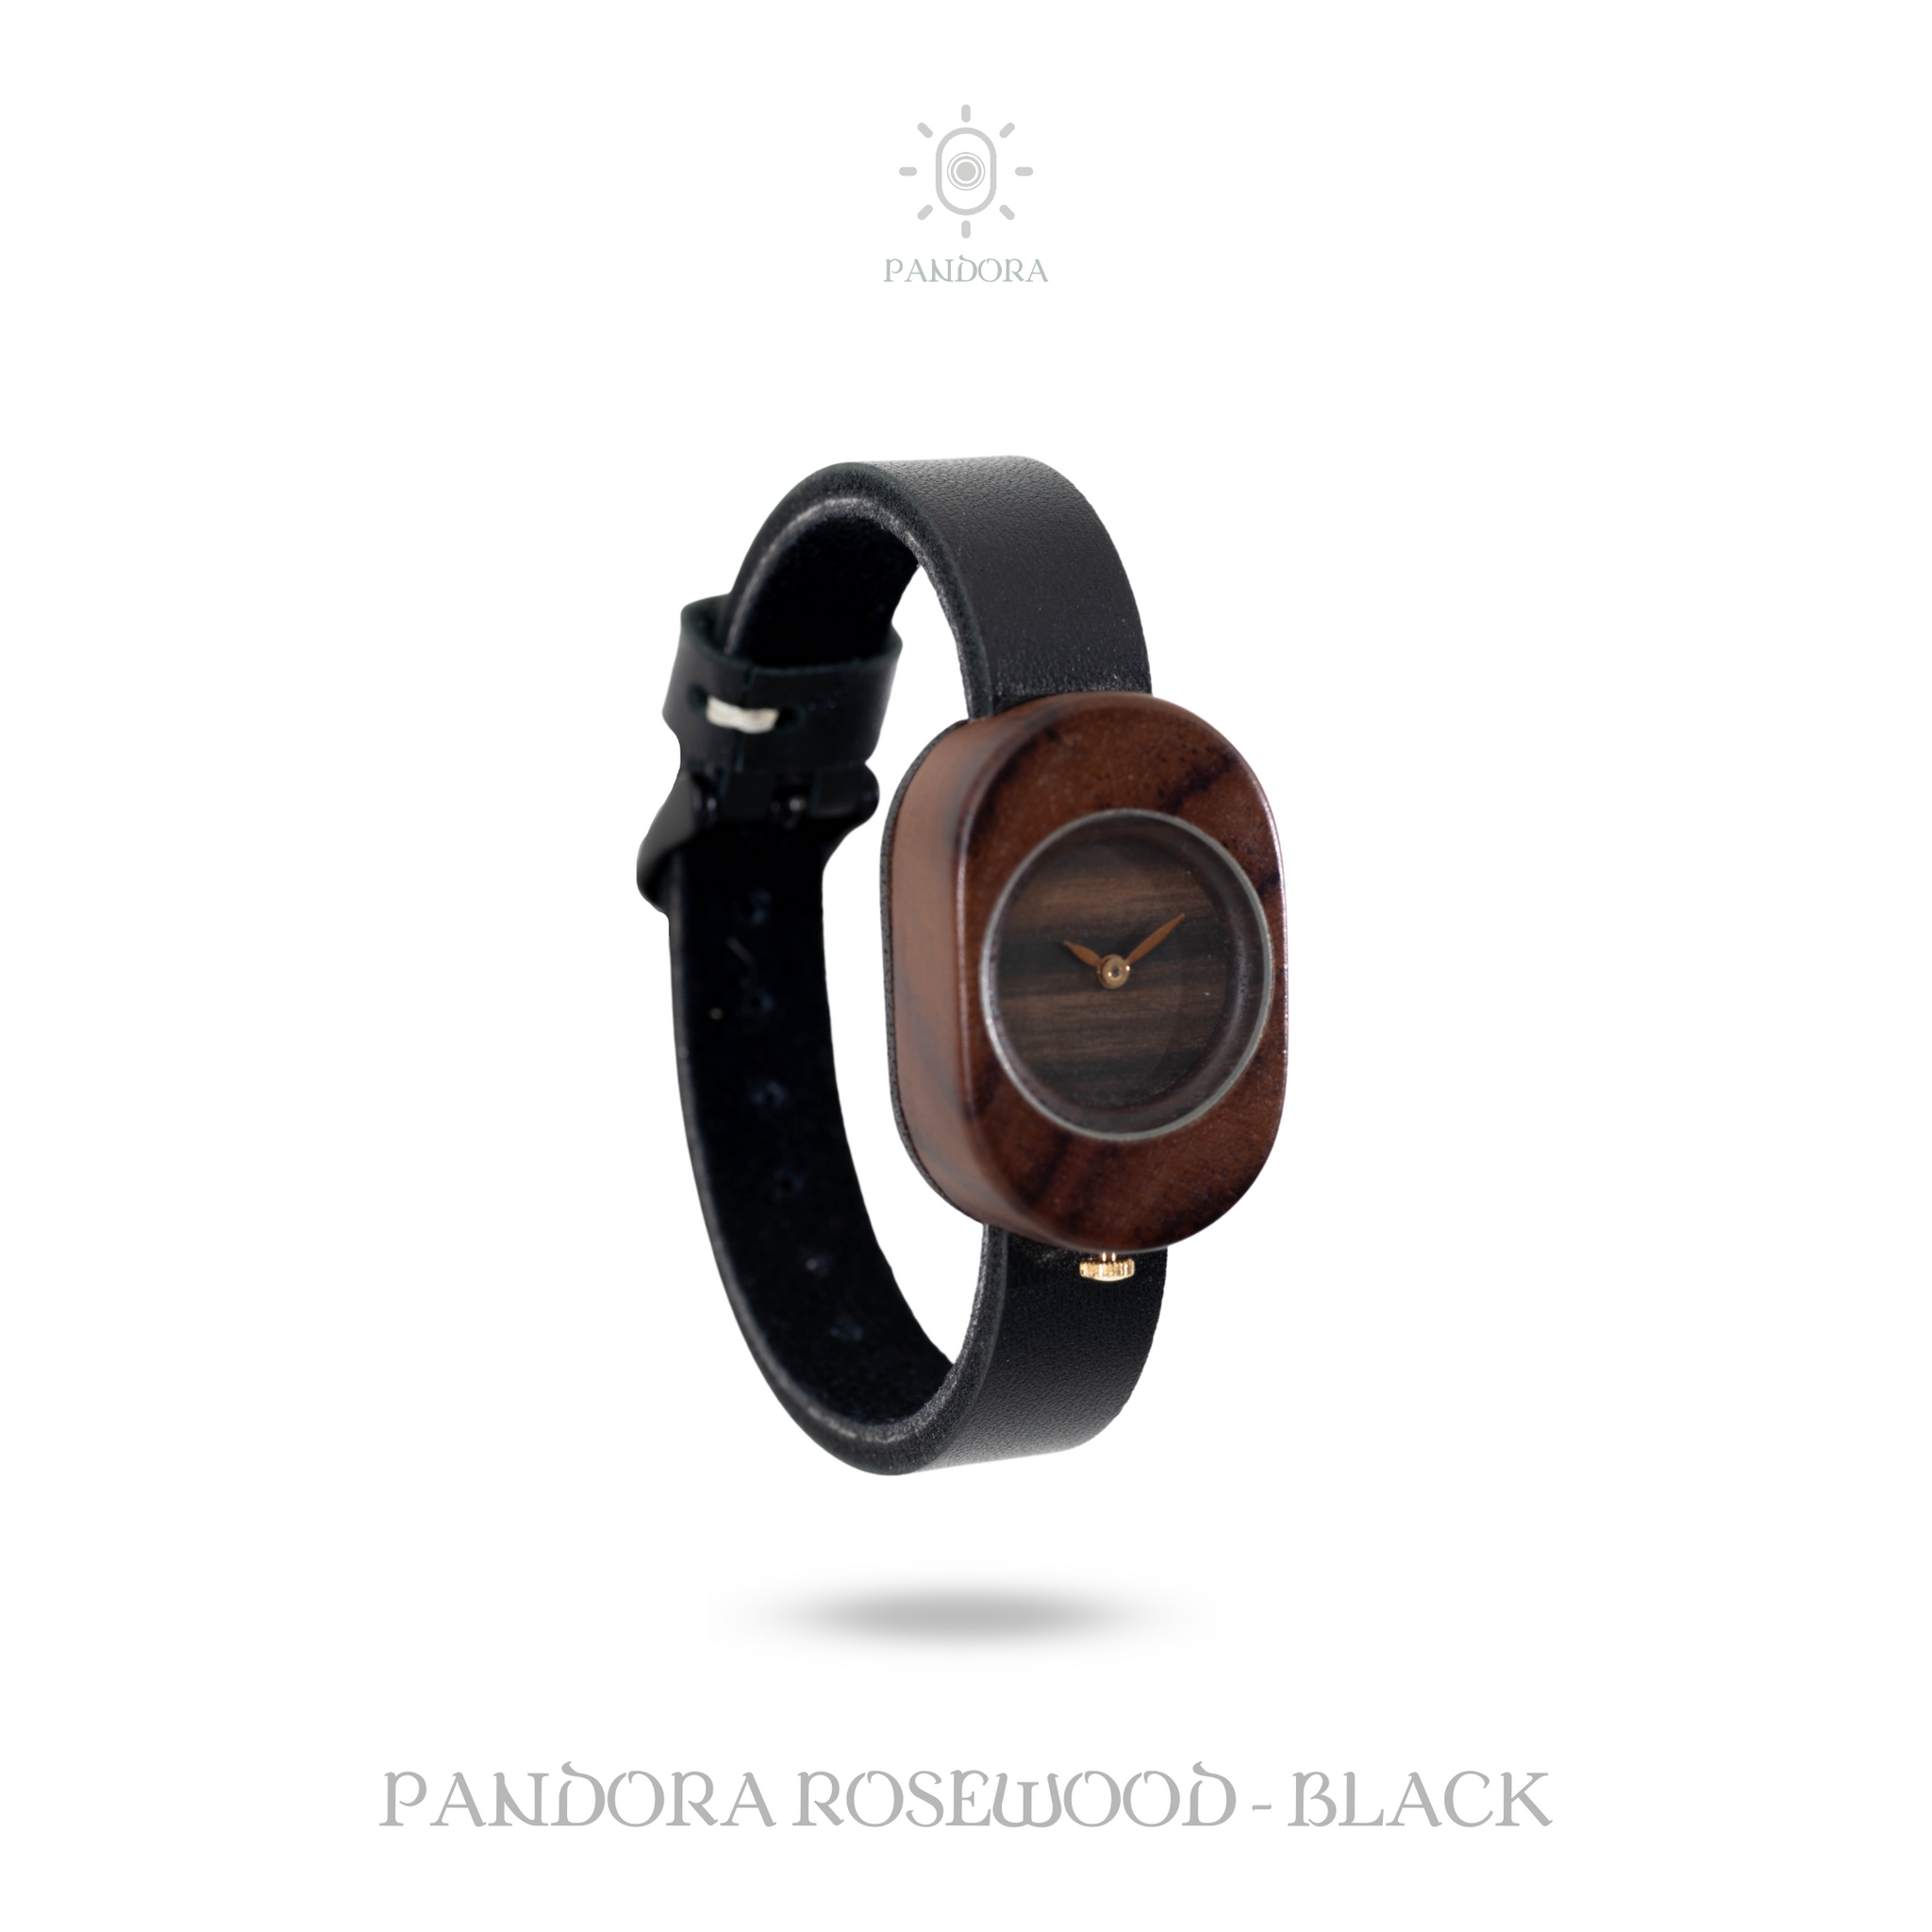 Eboni Pandora Rosewood - Black